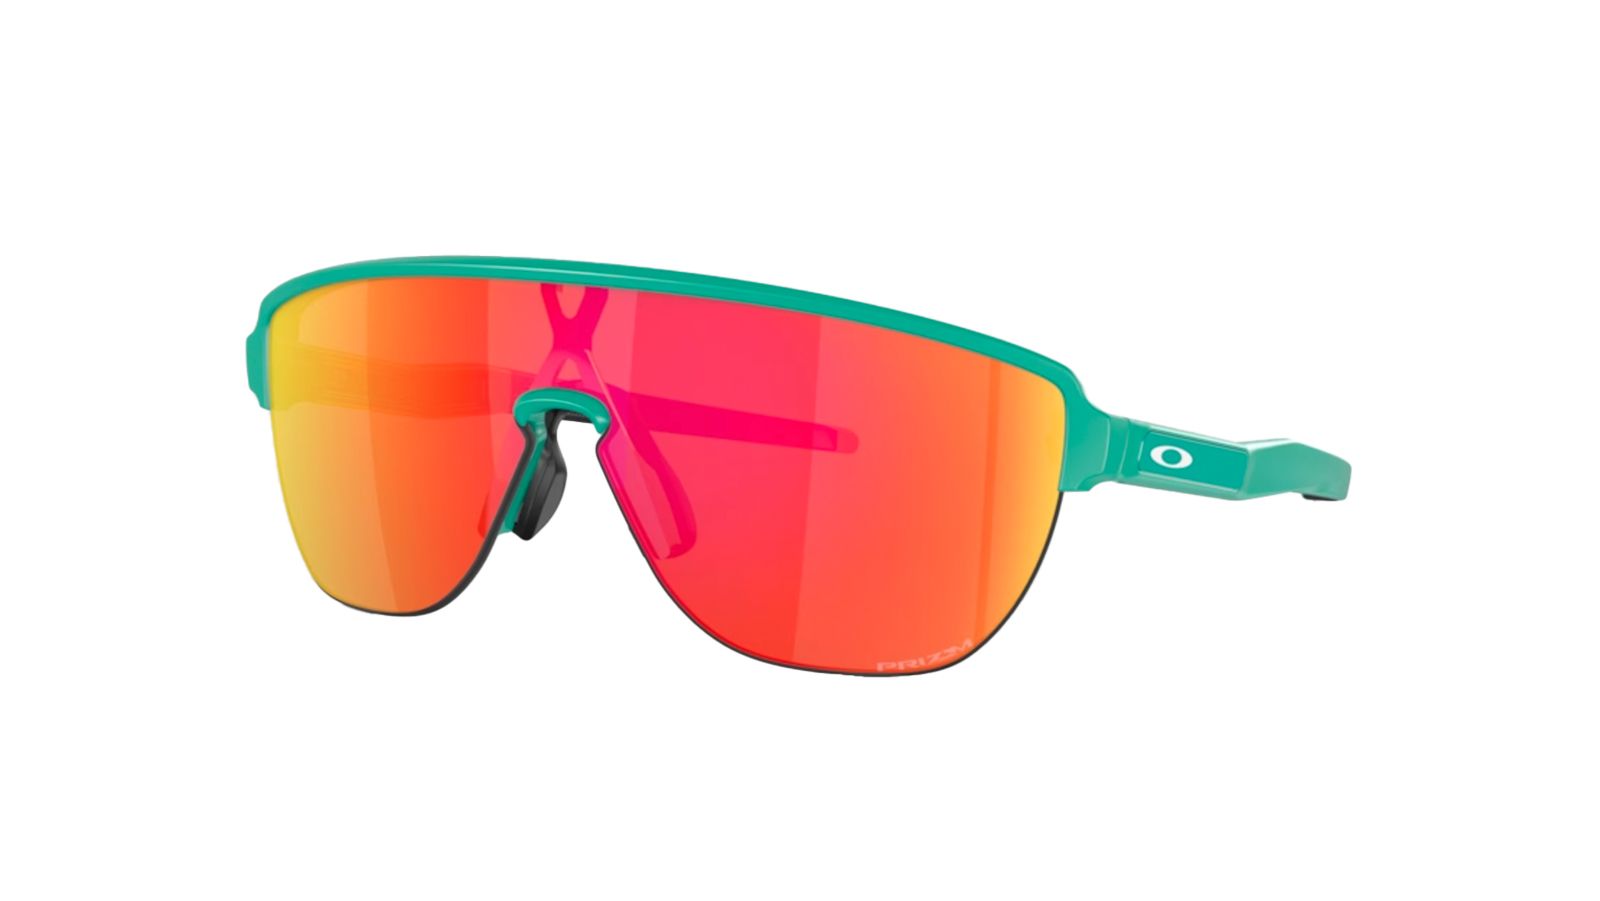 Shop Prescription Running Sunglasses (Top 24 Running Sunglasses)